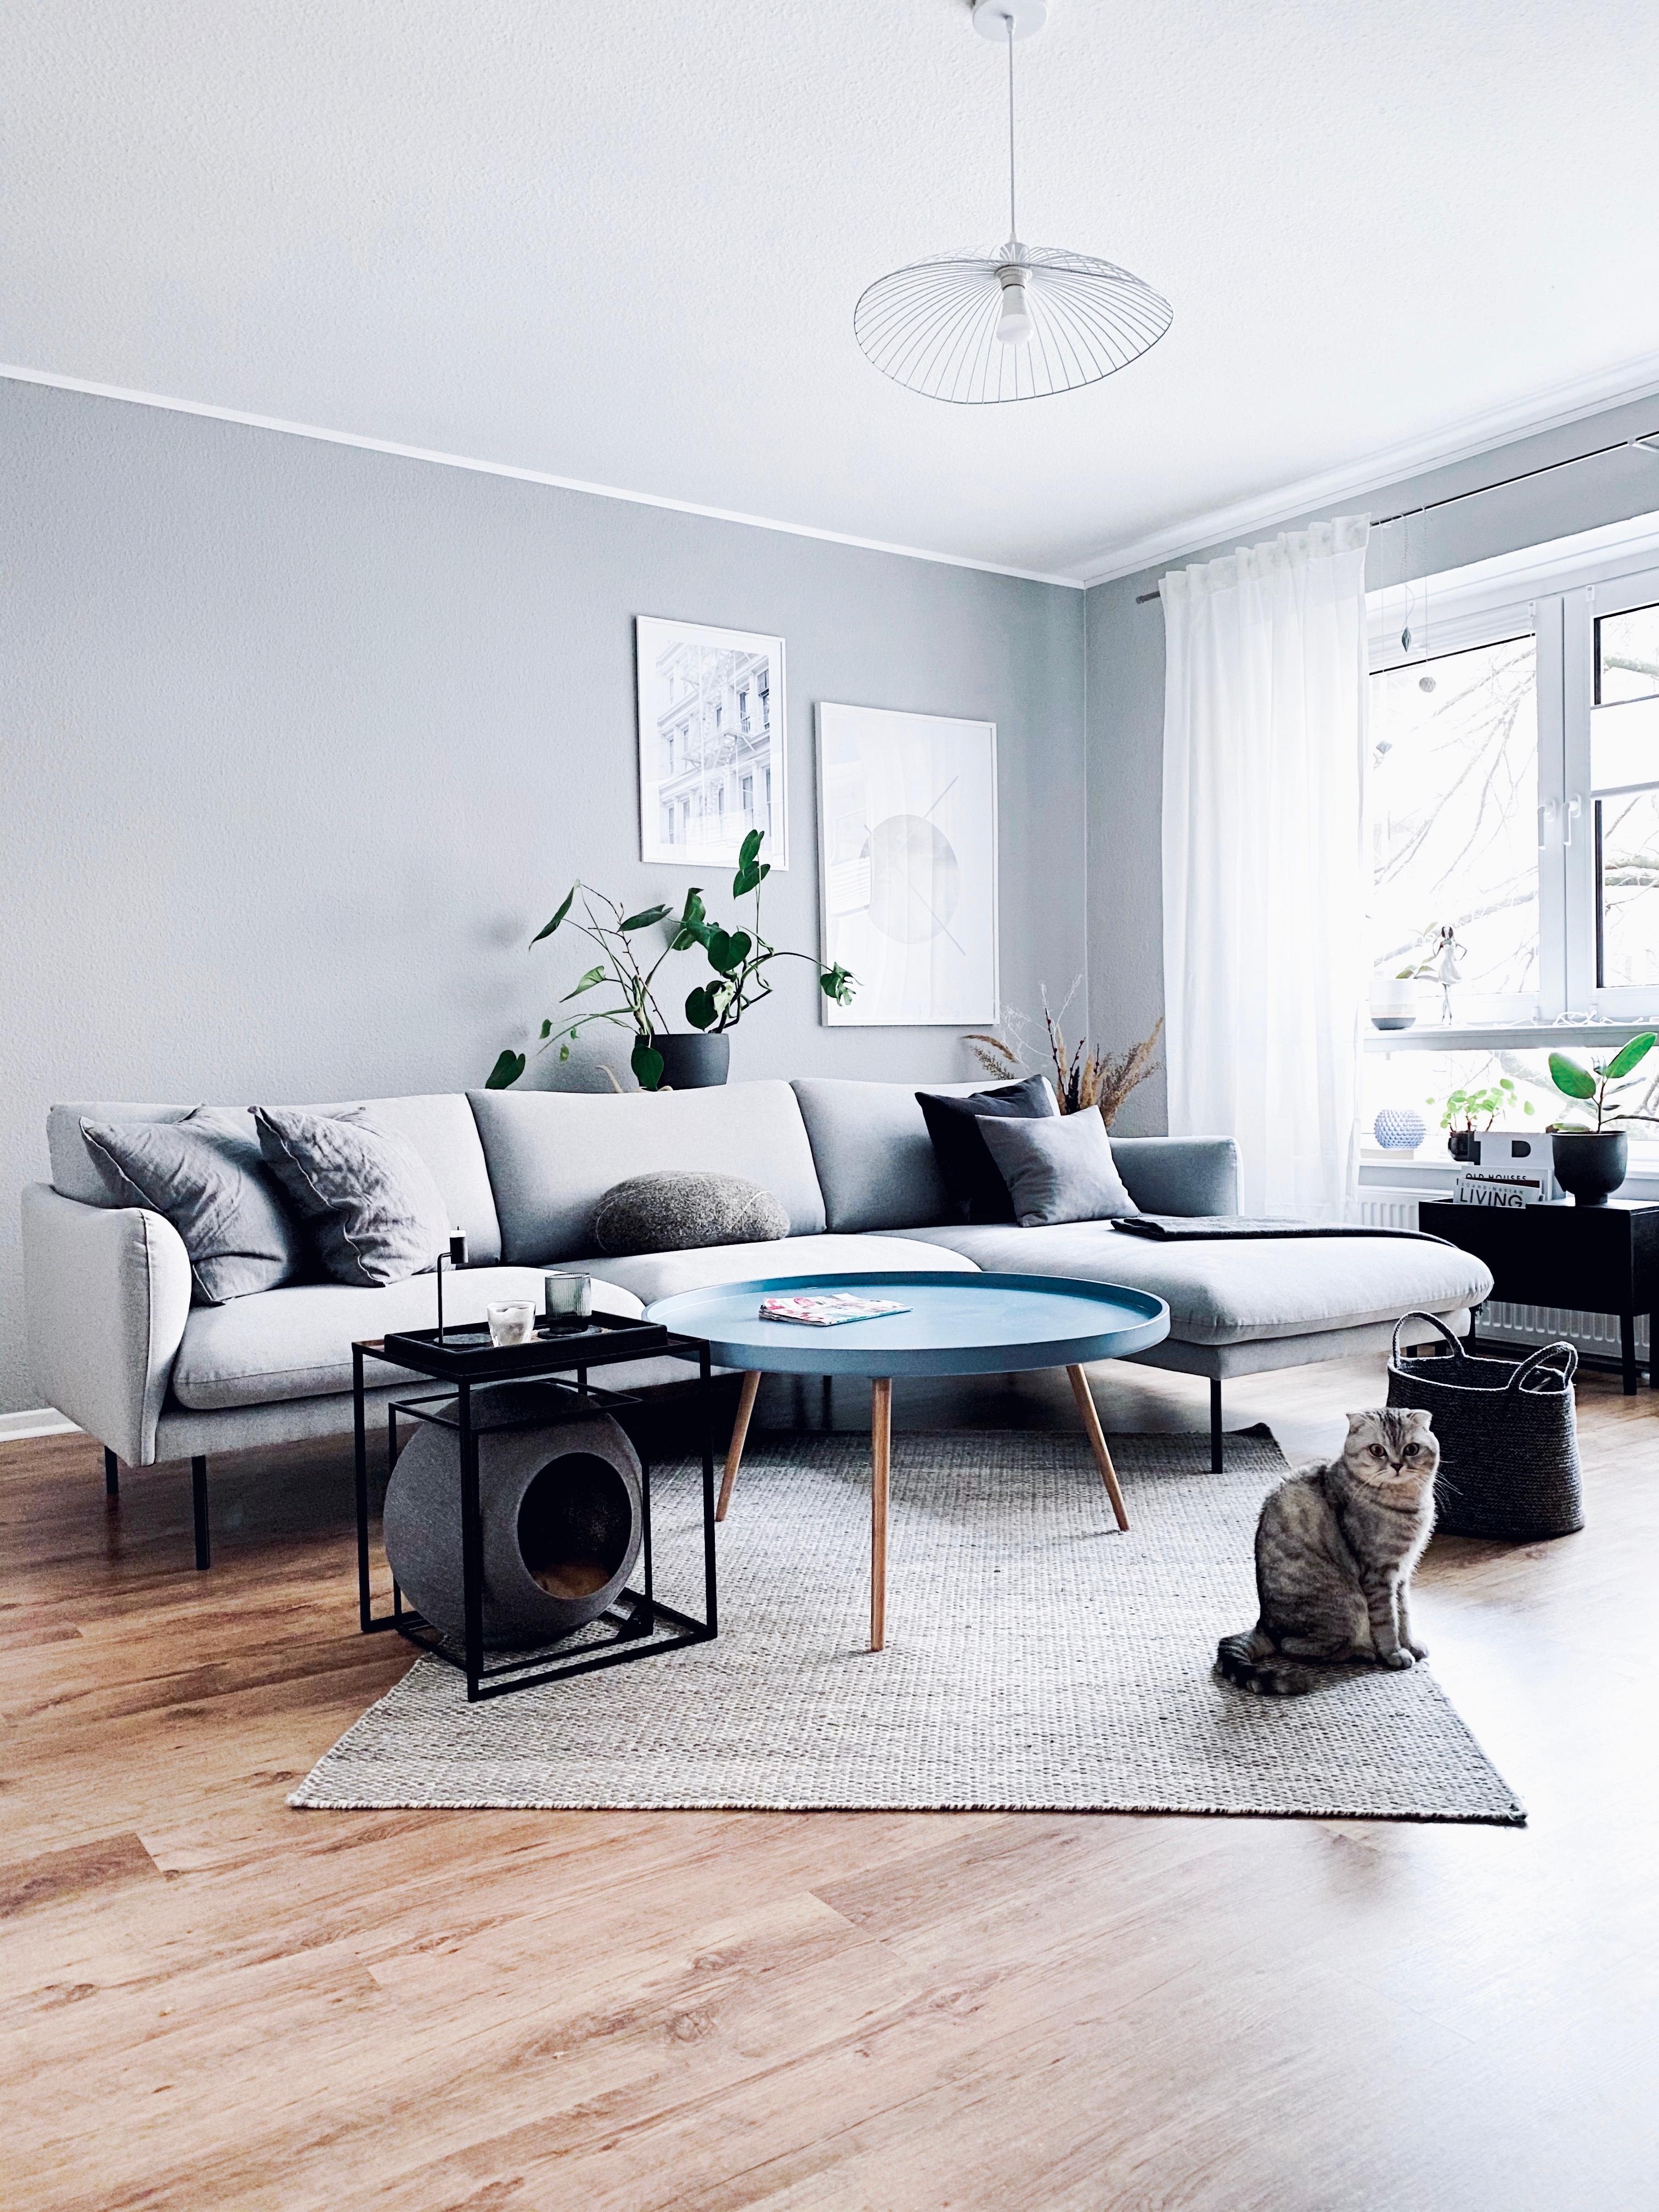 Grau-in-grau 🖤
#interior #greylover #nordicroom #scandinavianliving #catmom #livingroom #hygge 